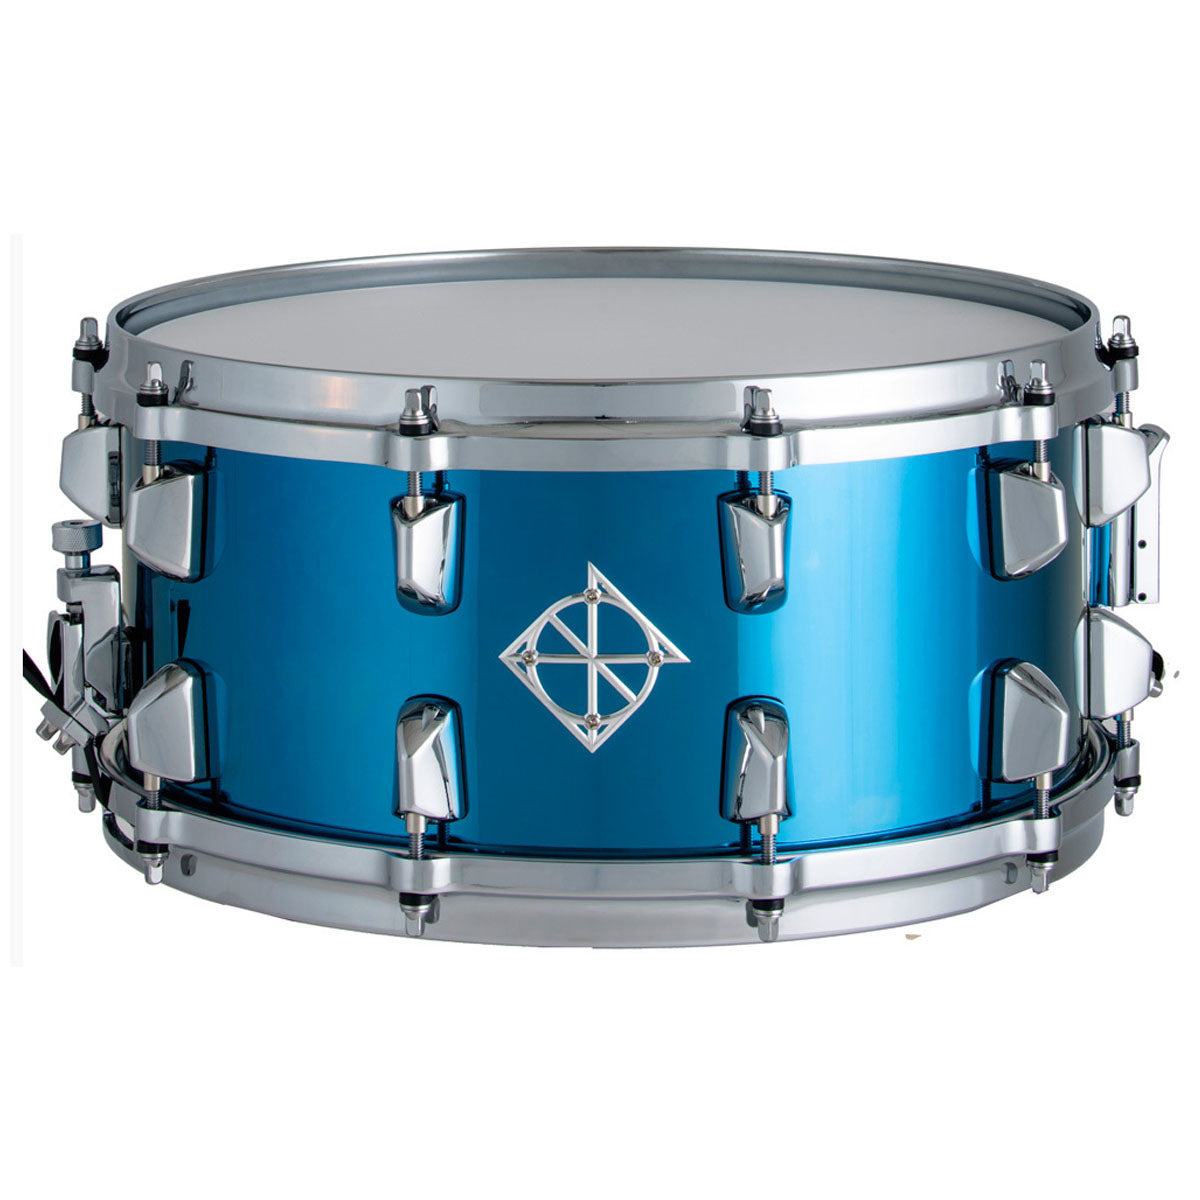 Dixon Artisan Series Snare Drum Blue Titanium Plated Steel - 14x6.5inch - PDSAN654BTS